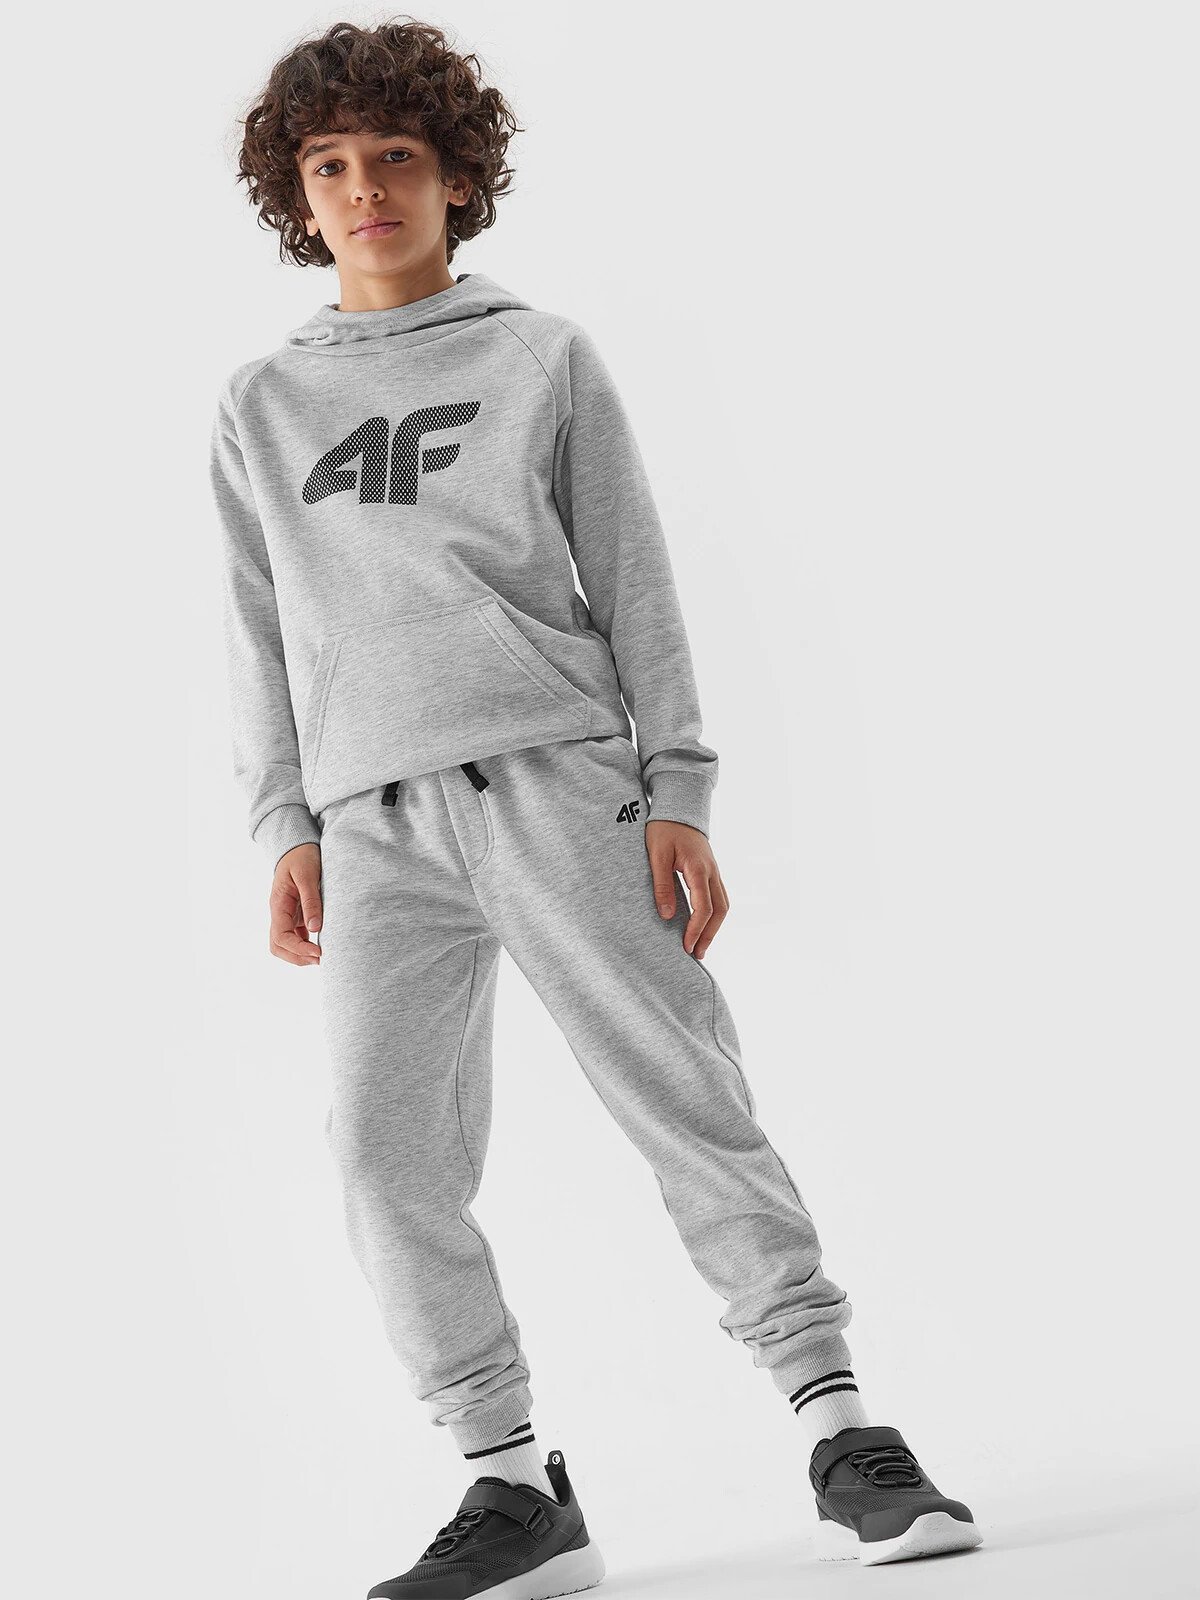 4F jogger sweatpants for boys - grey